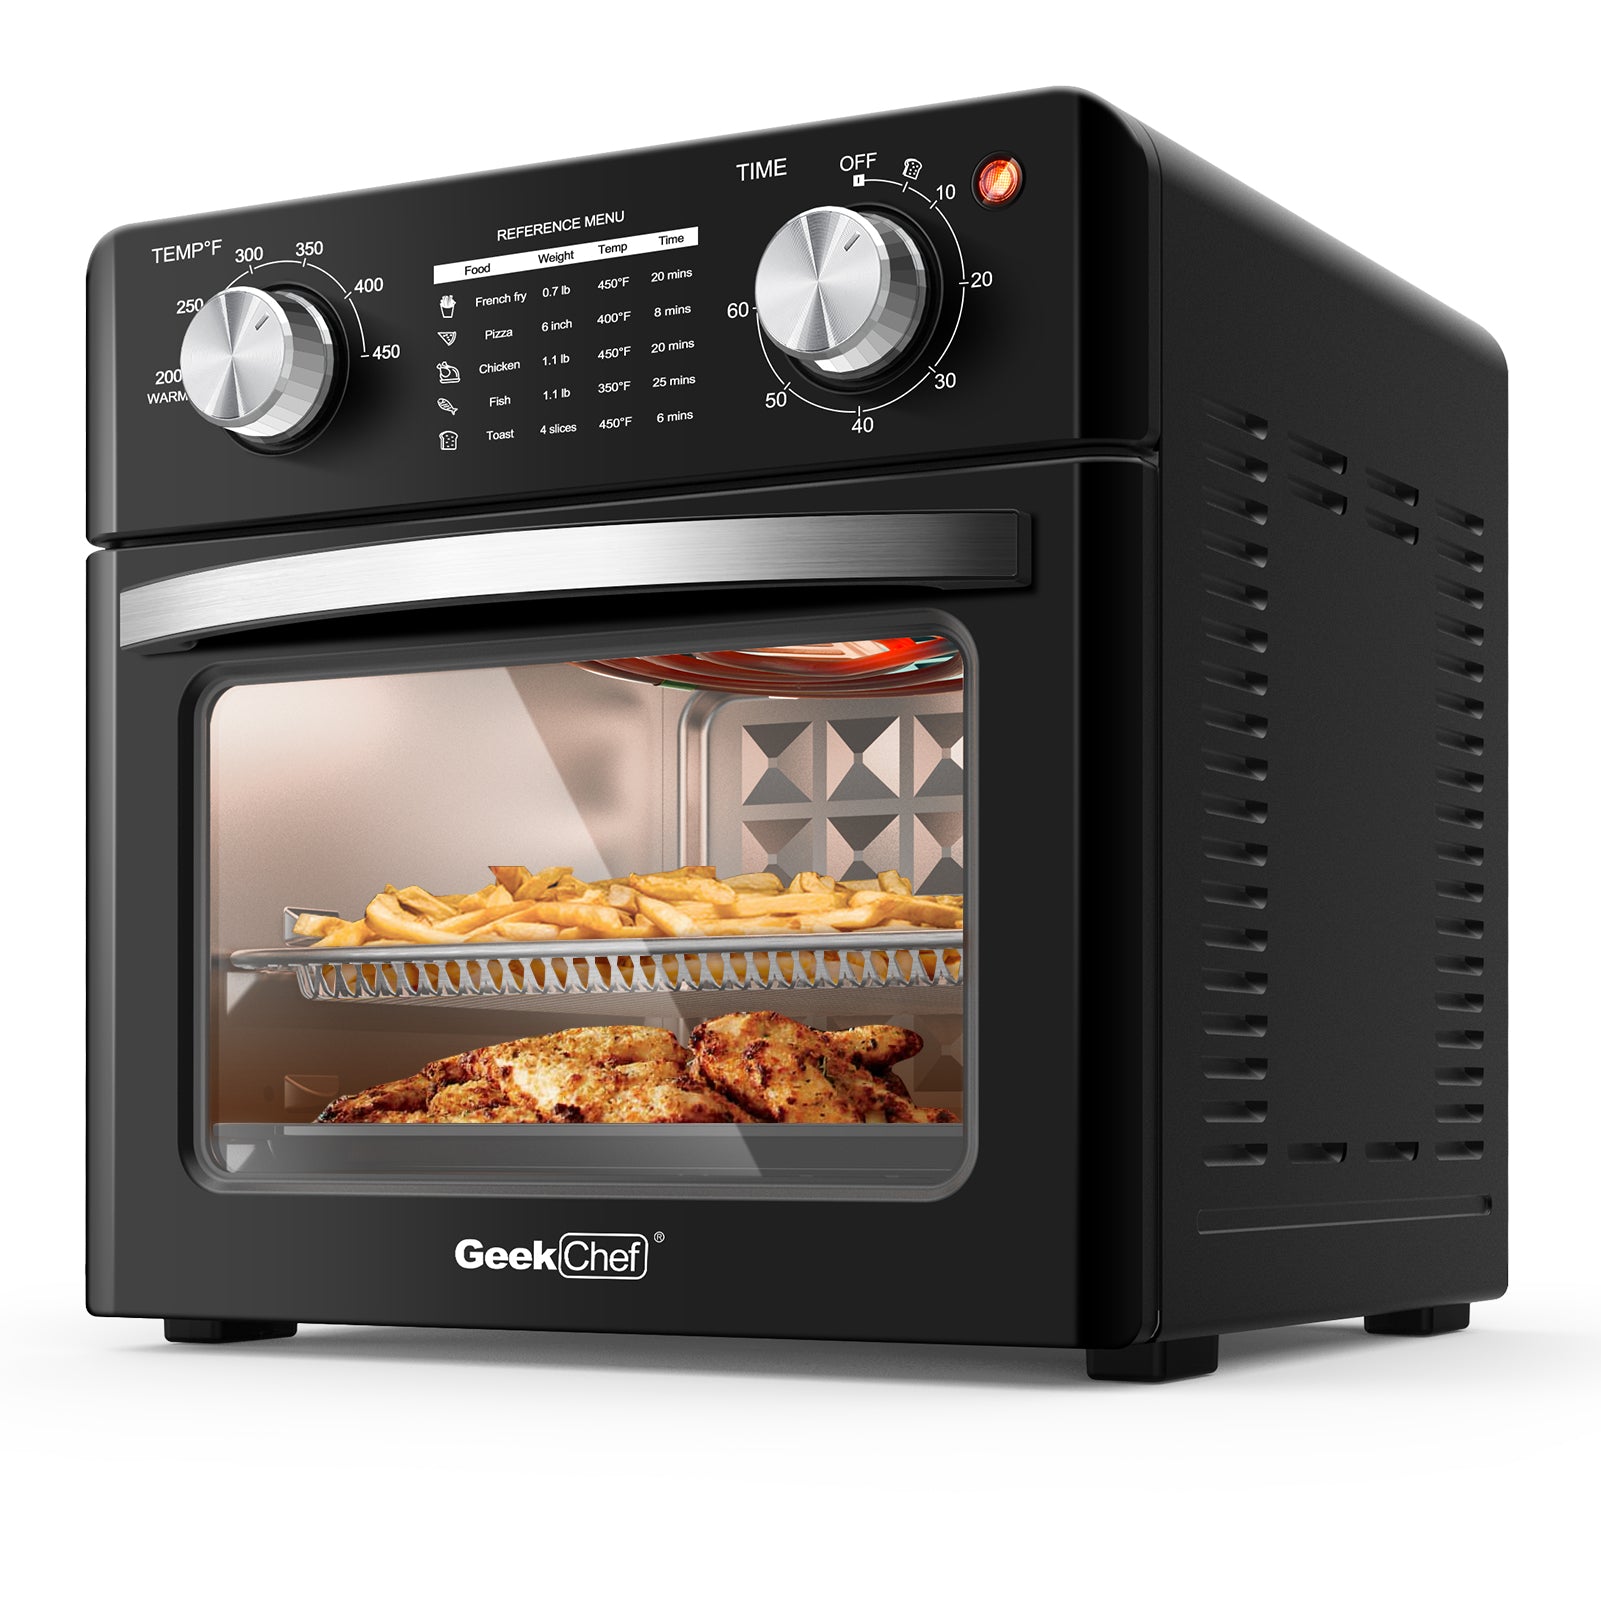  Air Fryer, Paris Rhône 15QT Toaster Oven Countertop